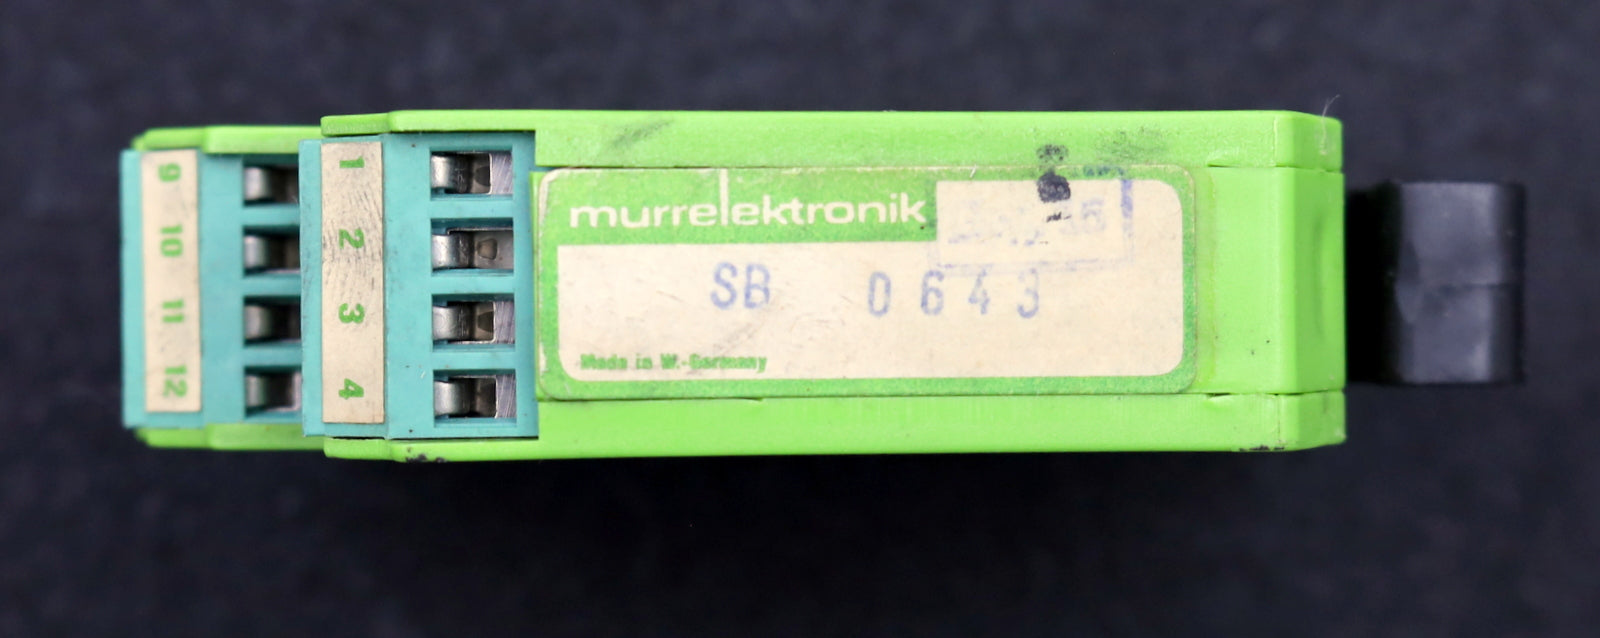 Bild des Artikels MURRELEKRONIK-Relais-SB0643-gebraucht